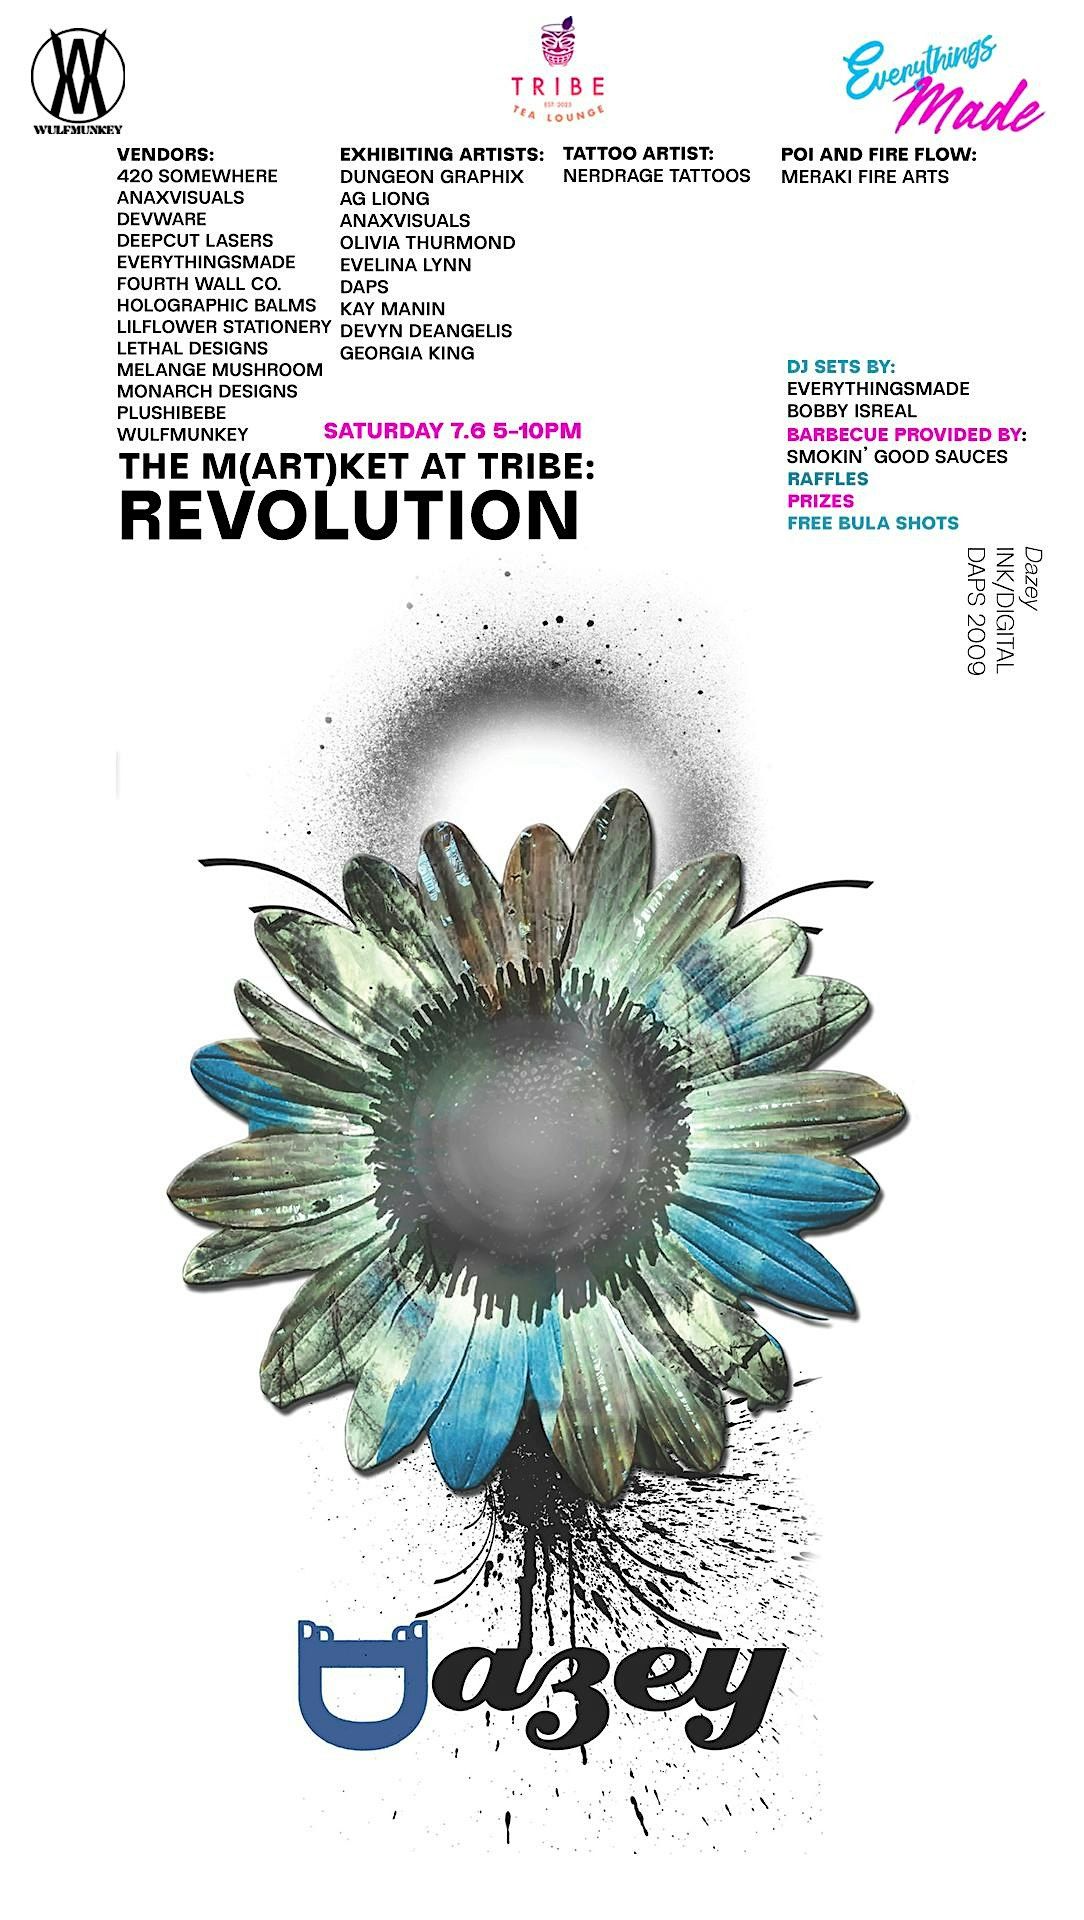 The M(art)ket at Tribe: Revolution